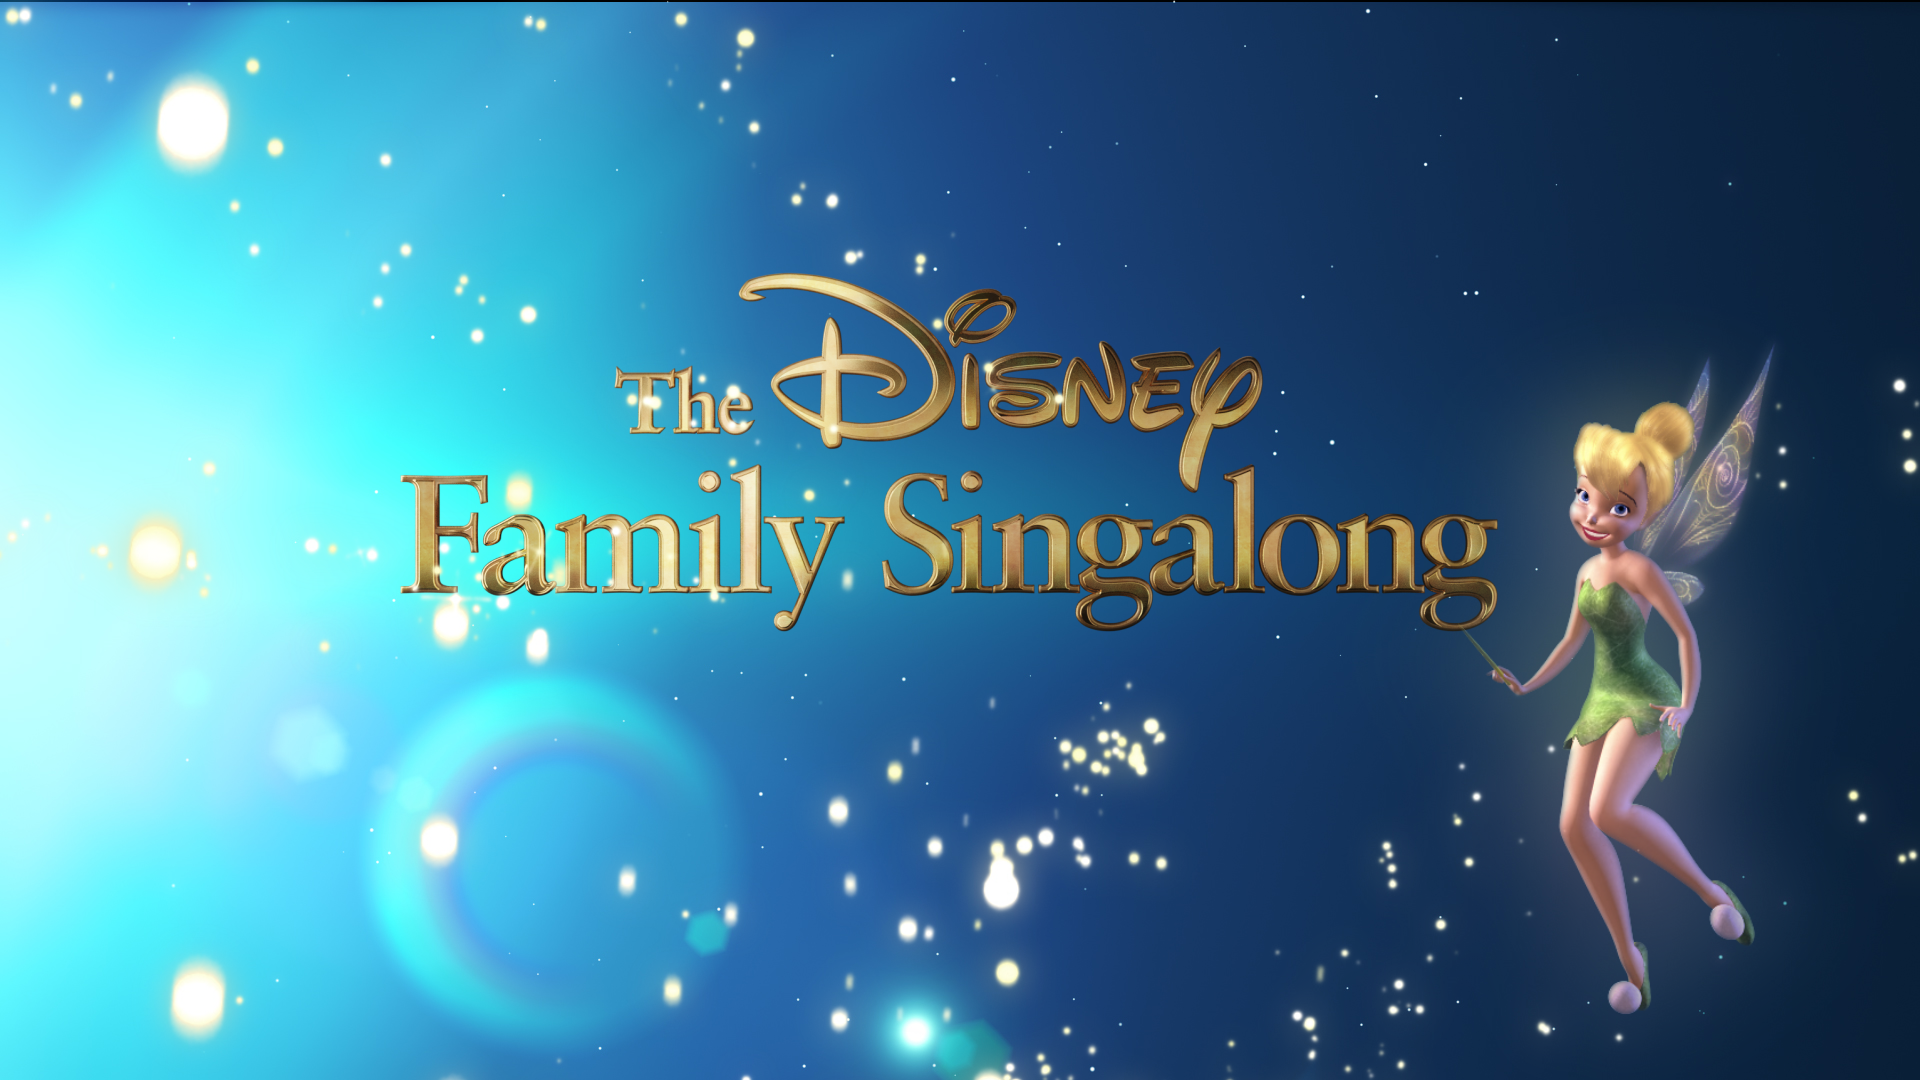 Disney Family Singalong Special To Air On Abc On April 16 Ryan Seacrest To Host 6abc Philadelphia